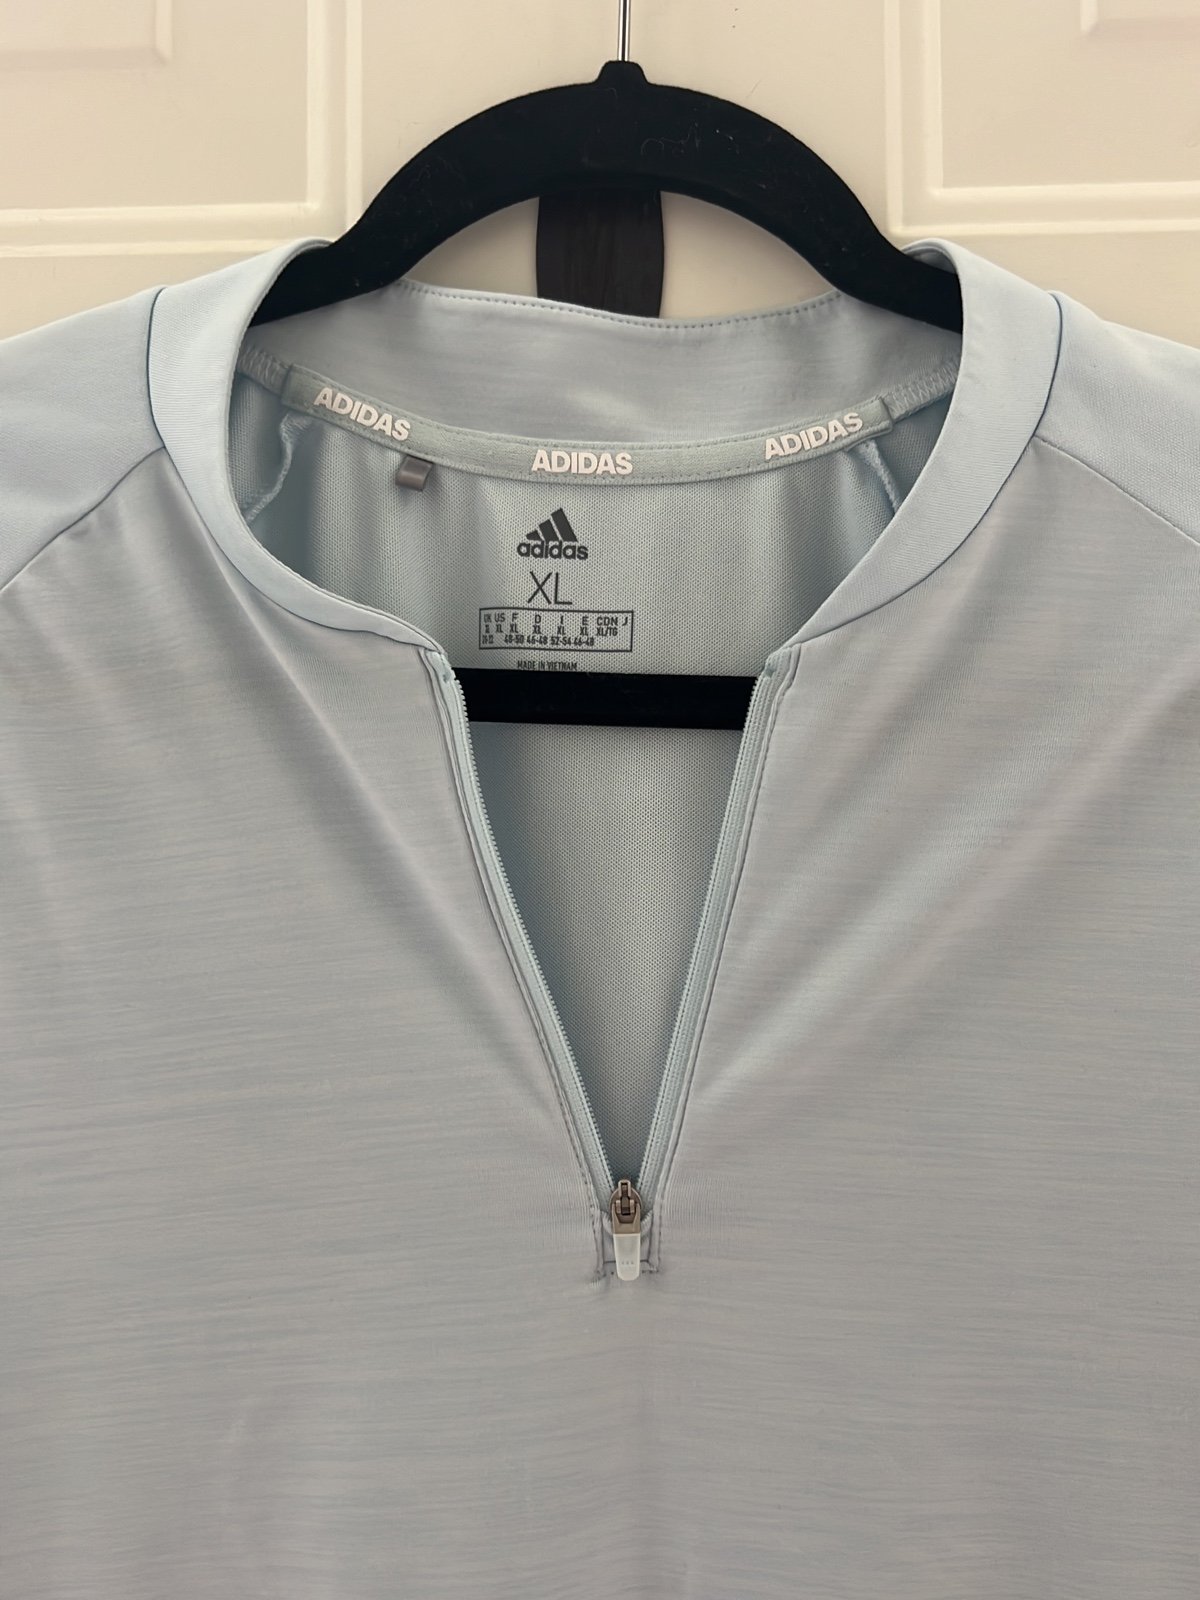 reasonable price Adidas golf shirt pCVU3vloB Store Onli